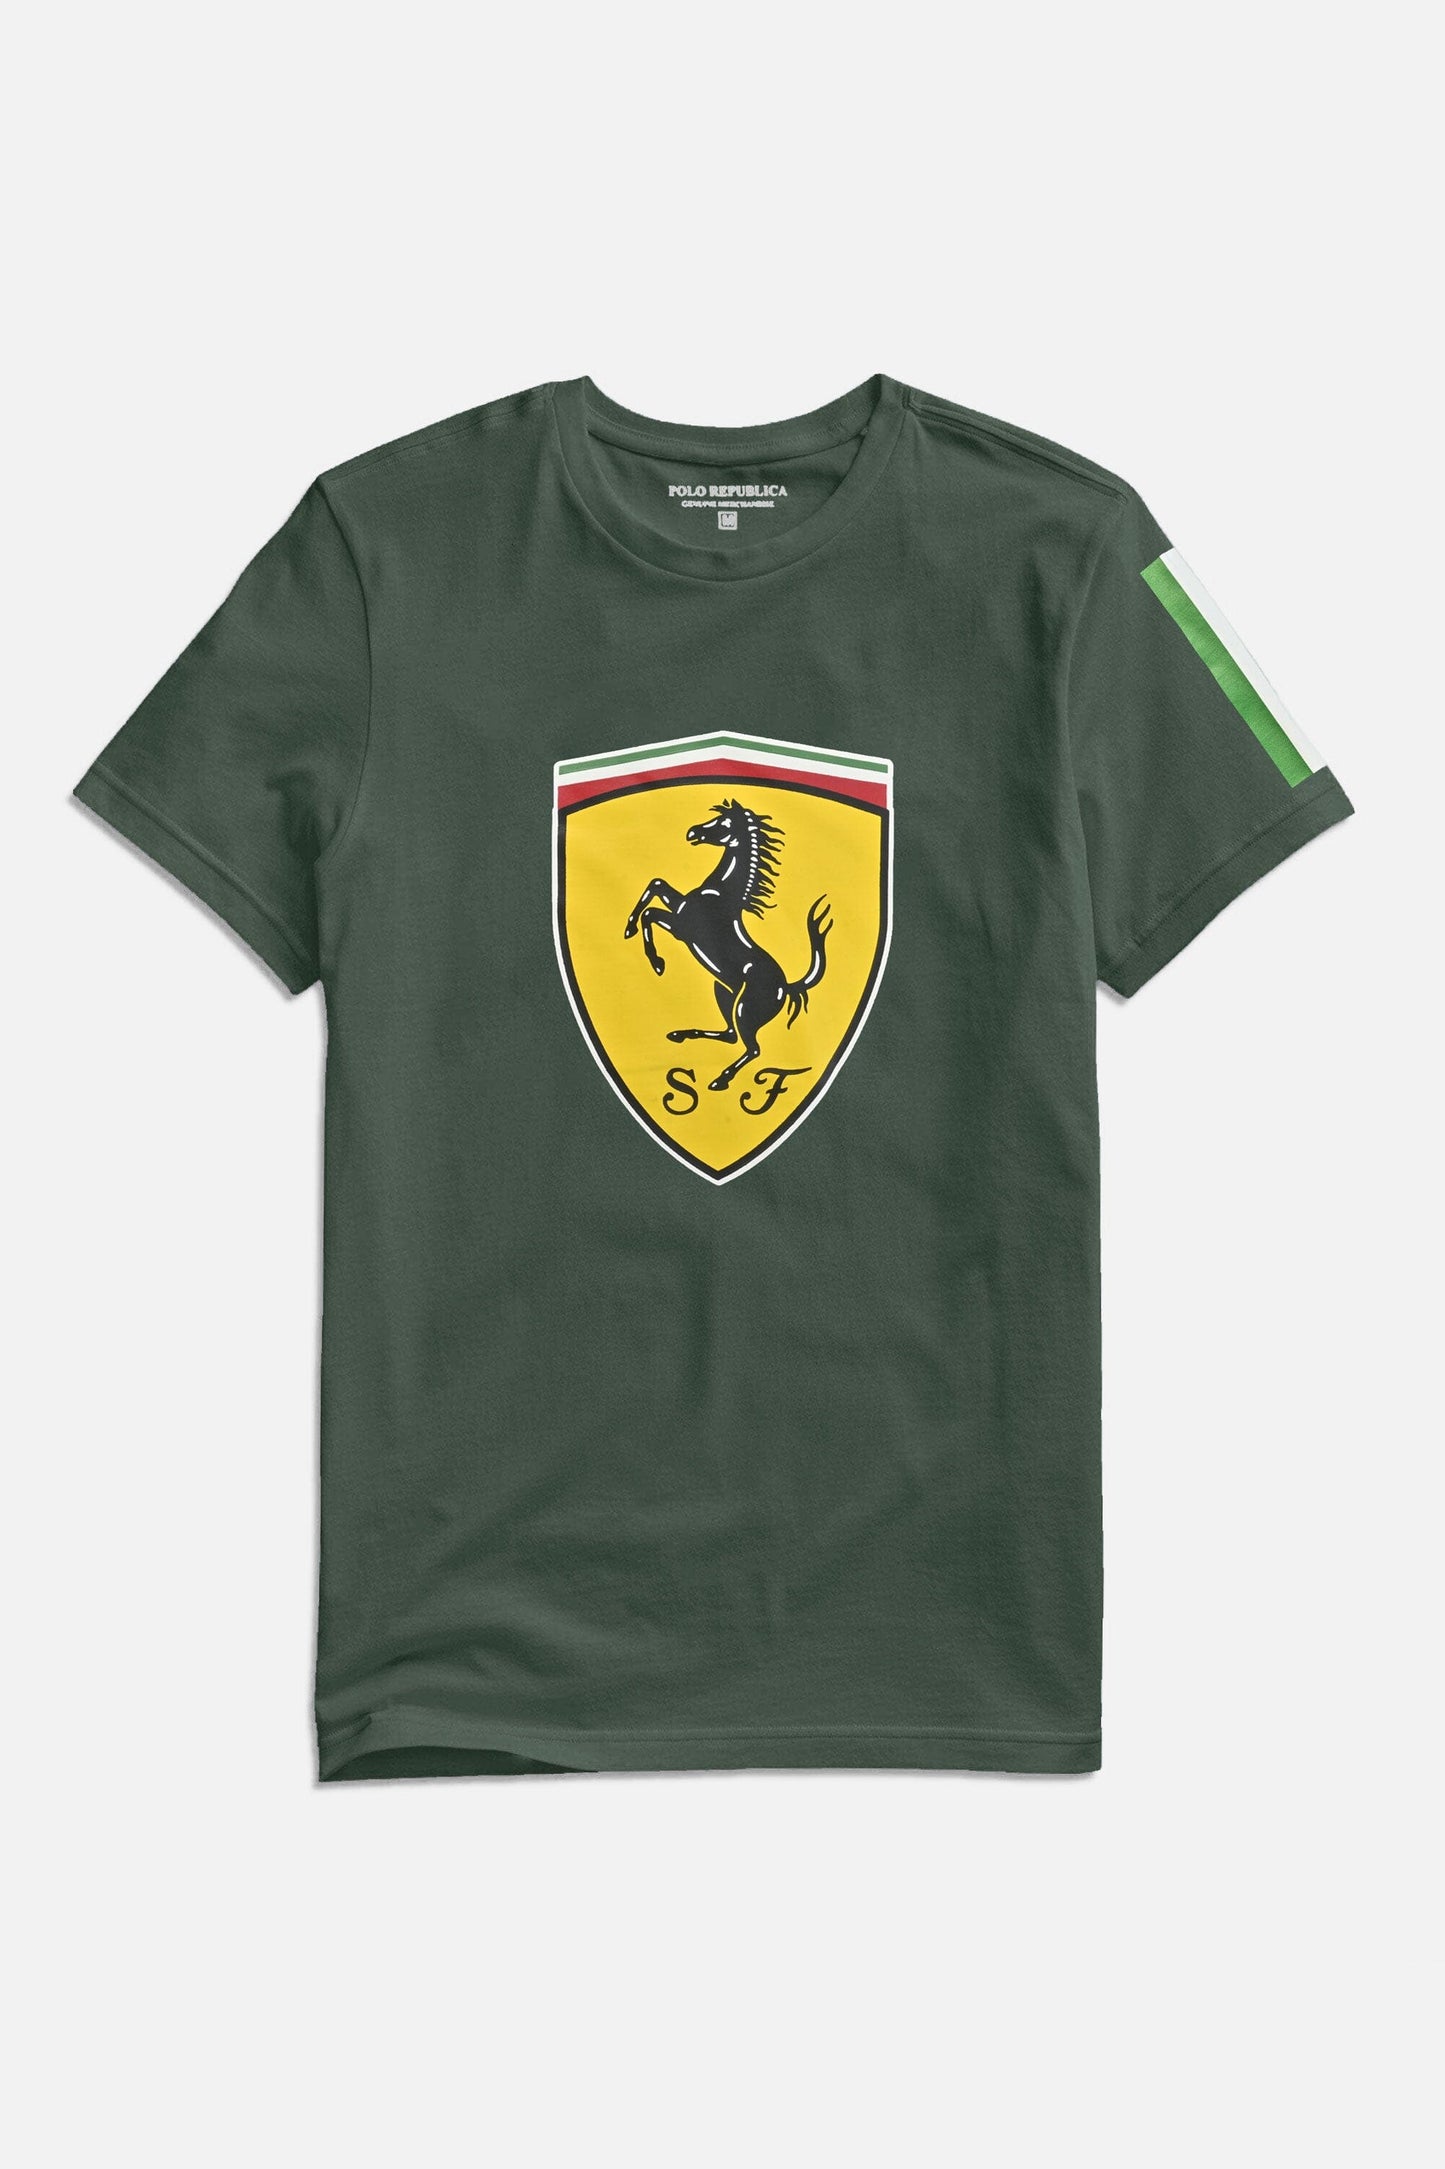 Polo Republica Men's PakWheels Ferrari Printed Crew Neck Tee Shirt